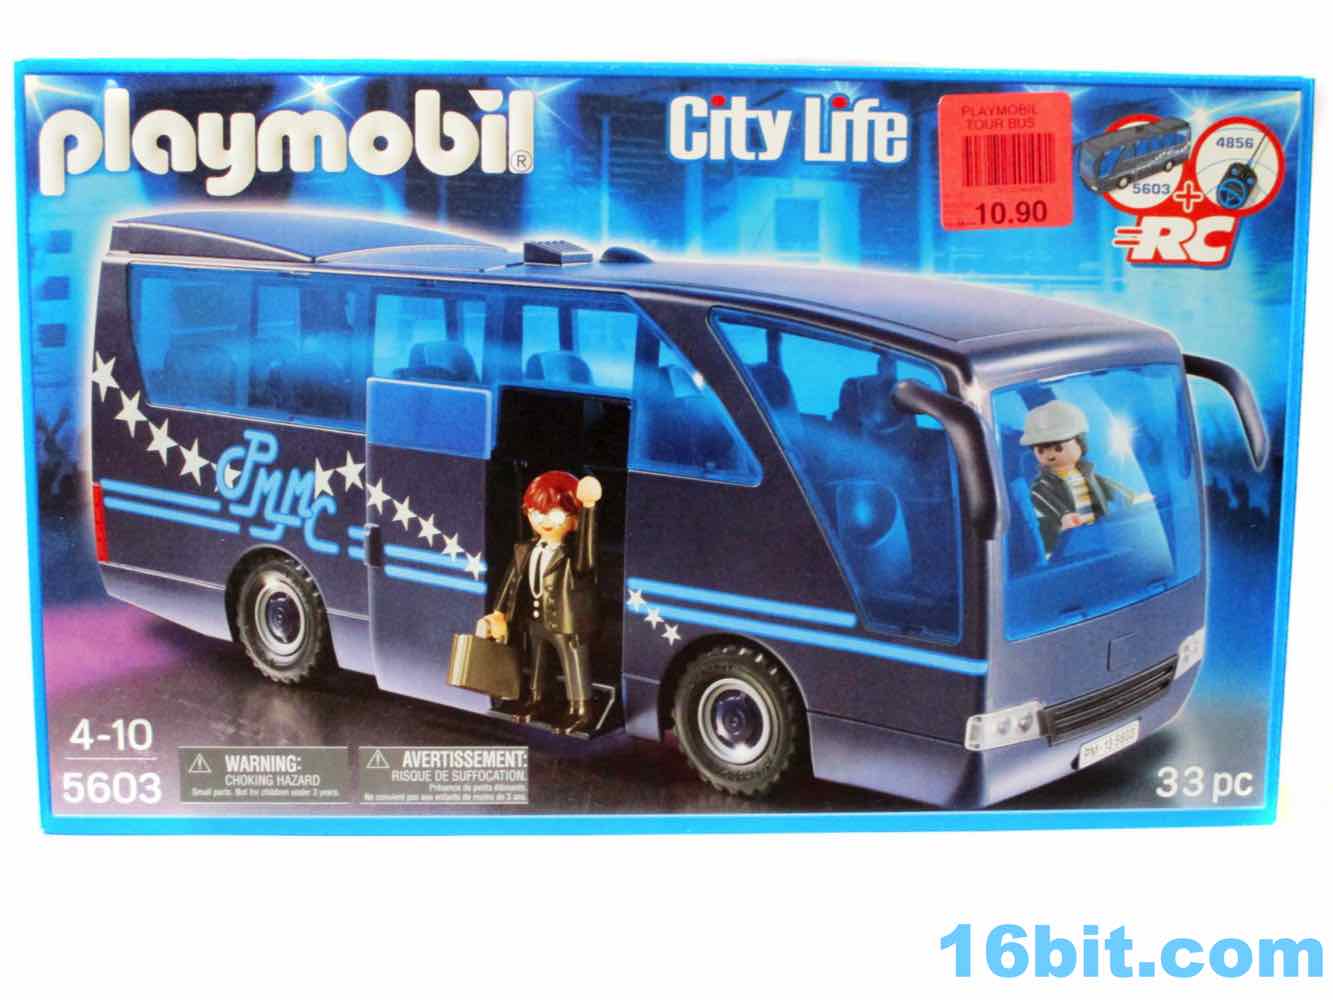 16bit.com Figure of the Day Review: Playmobil City Life Set